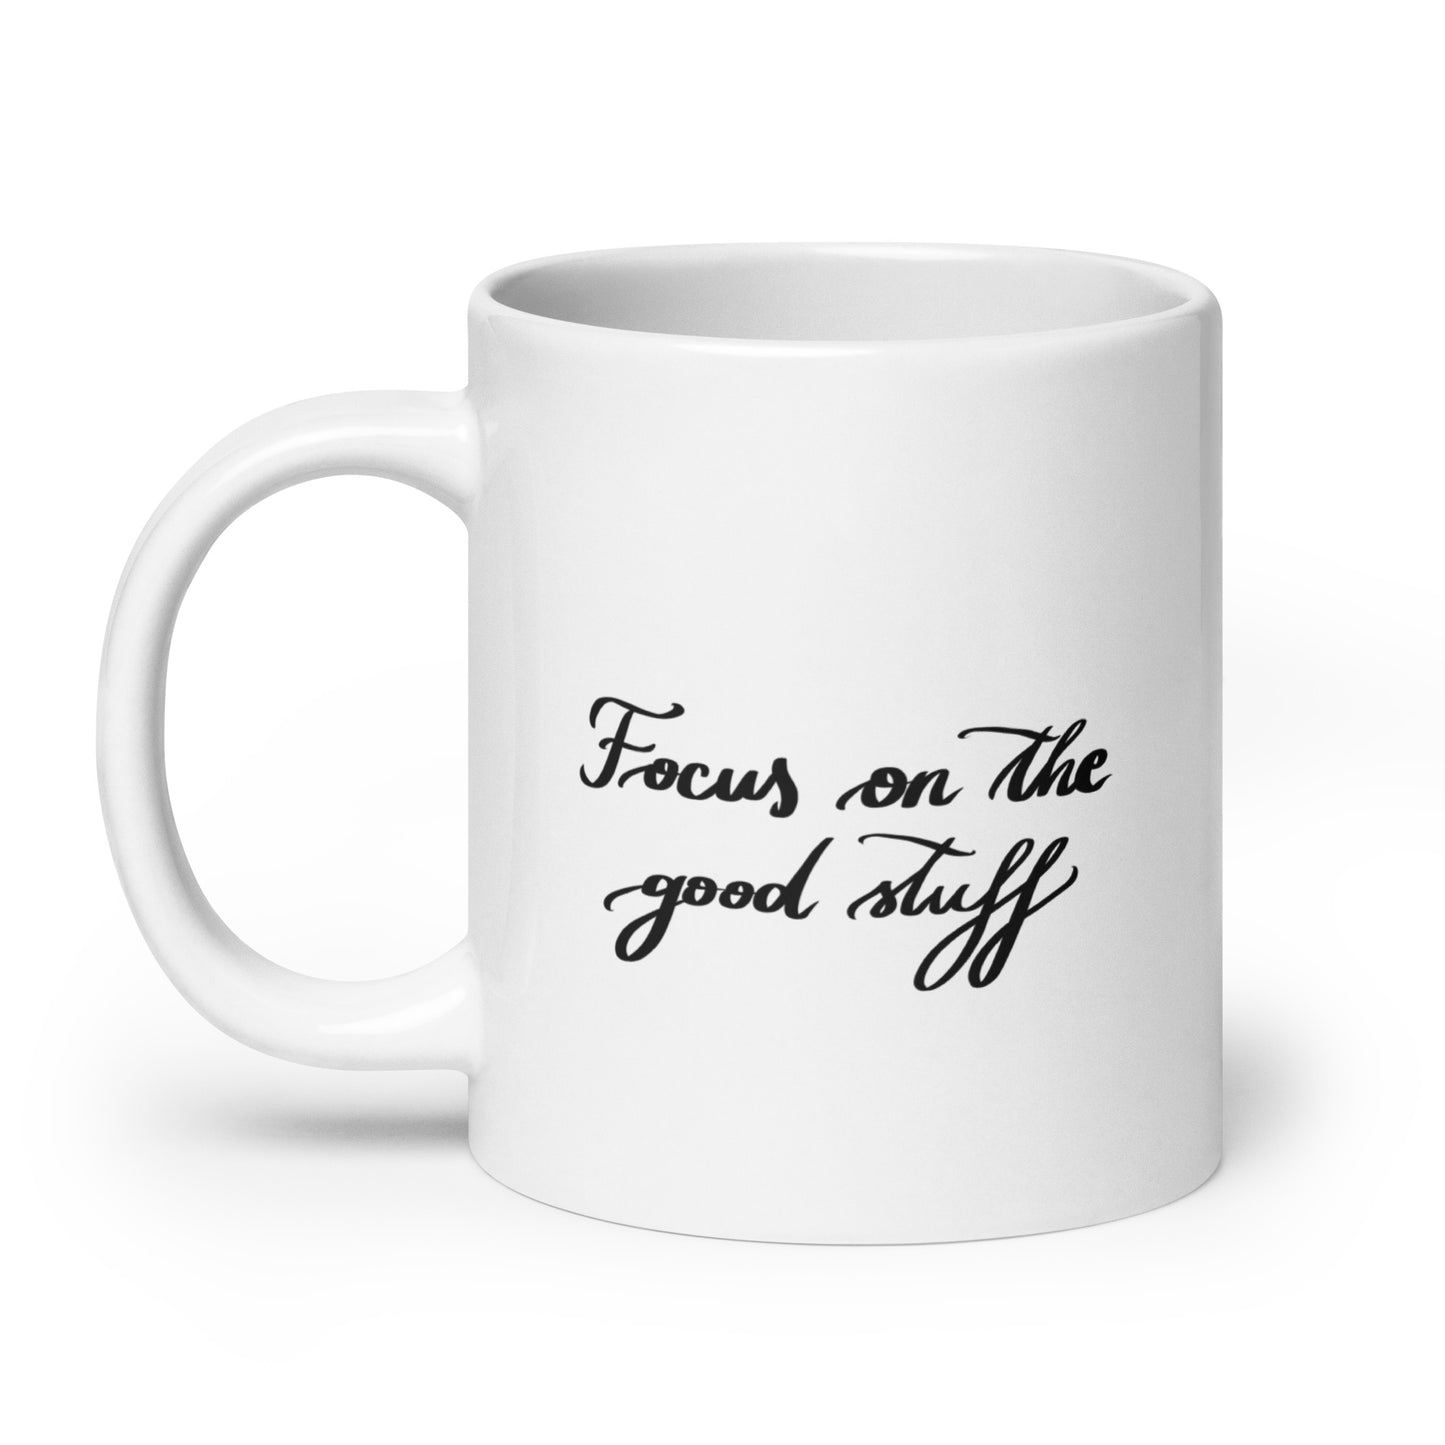 Ceramic mug "Focus on the good stuff"